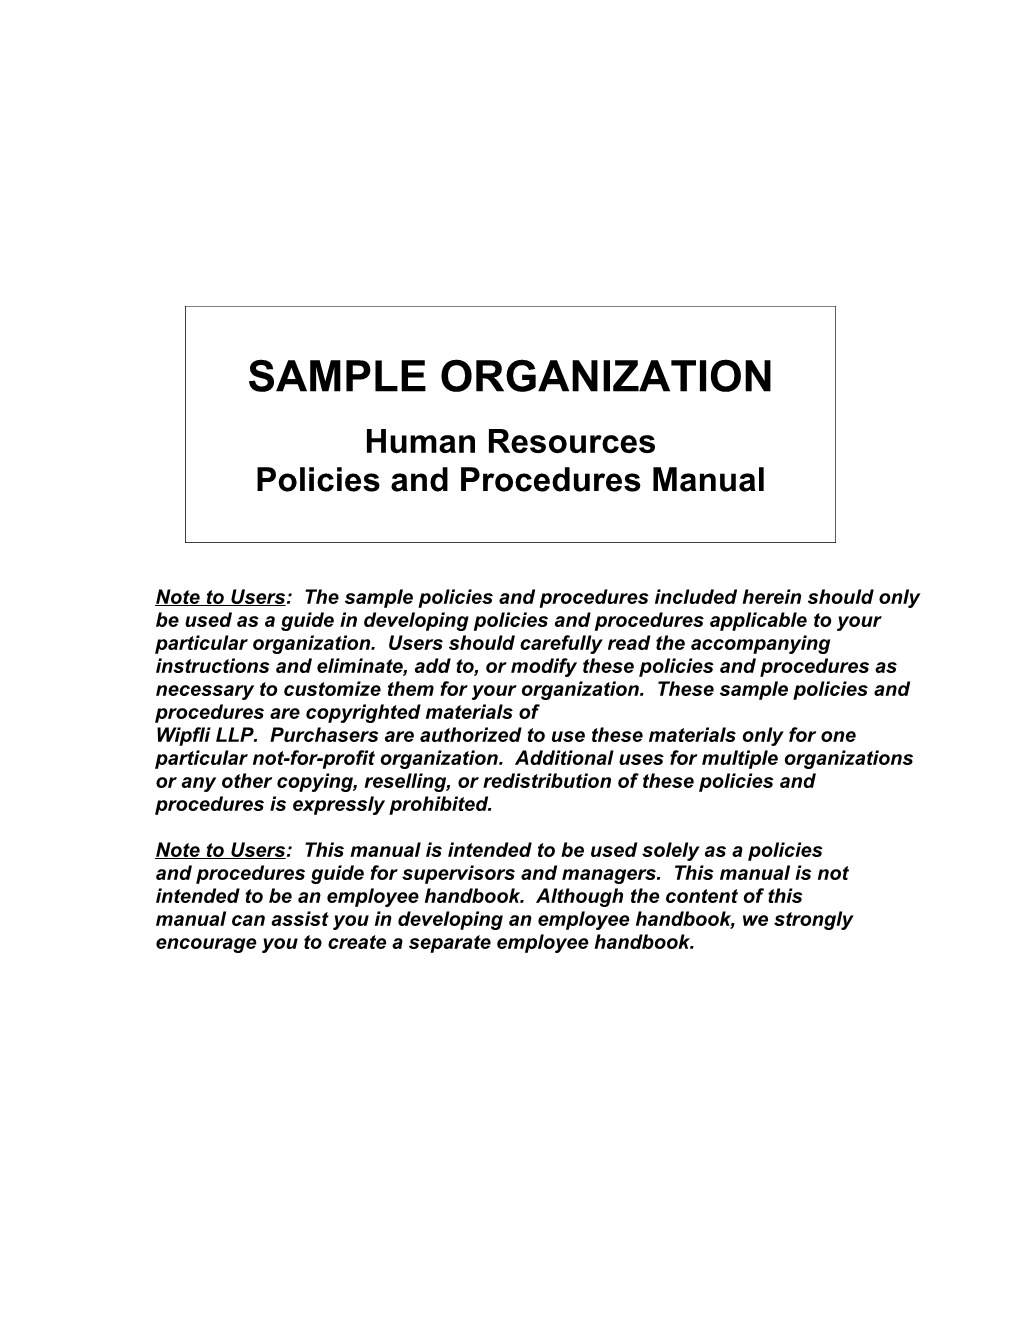 Sample Organization